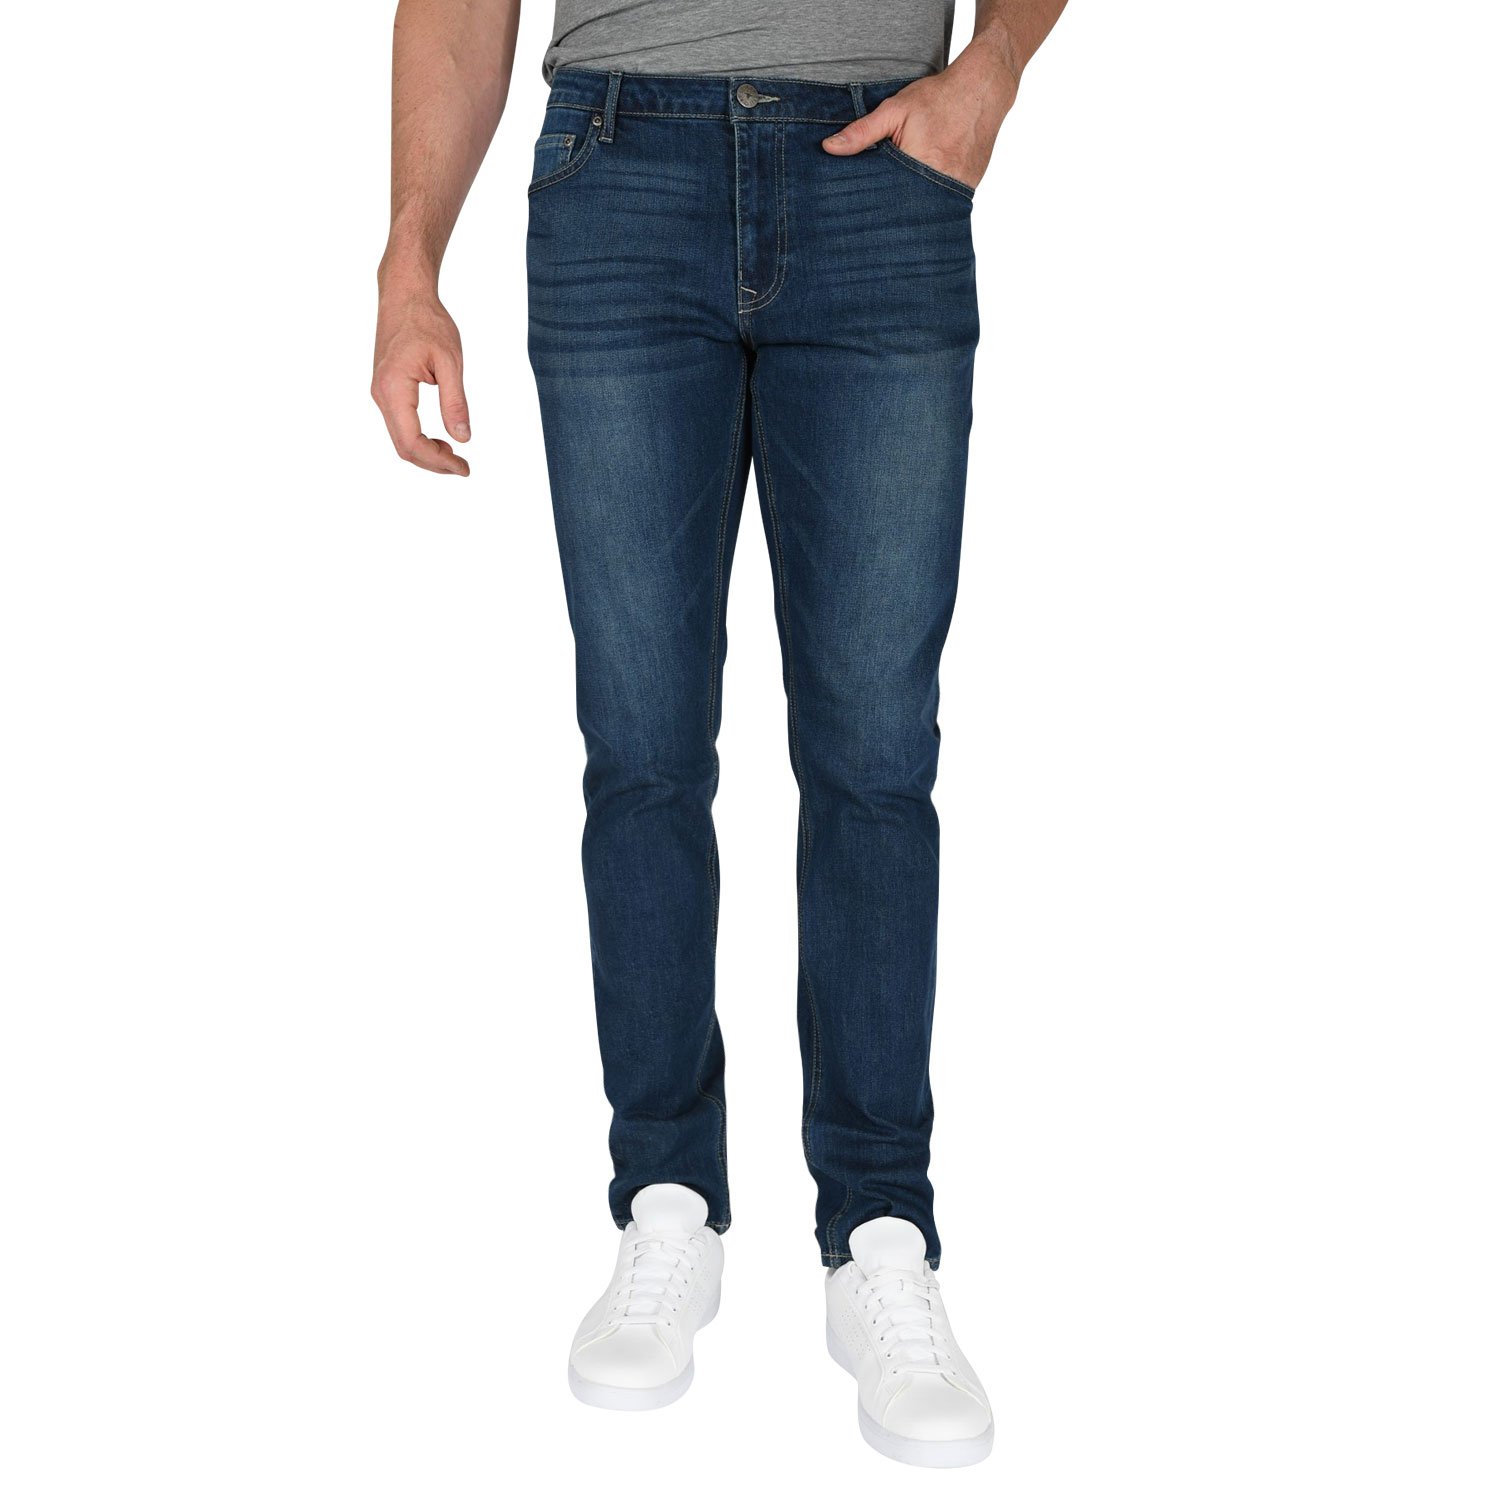 Carman TAPERED FIT Classic Blue Tall Men's Jeans